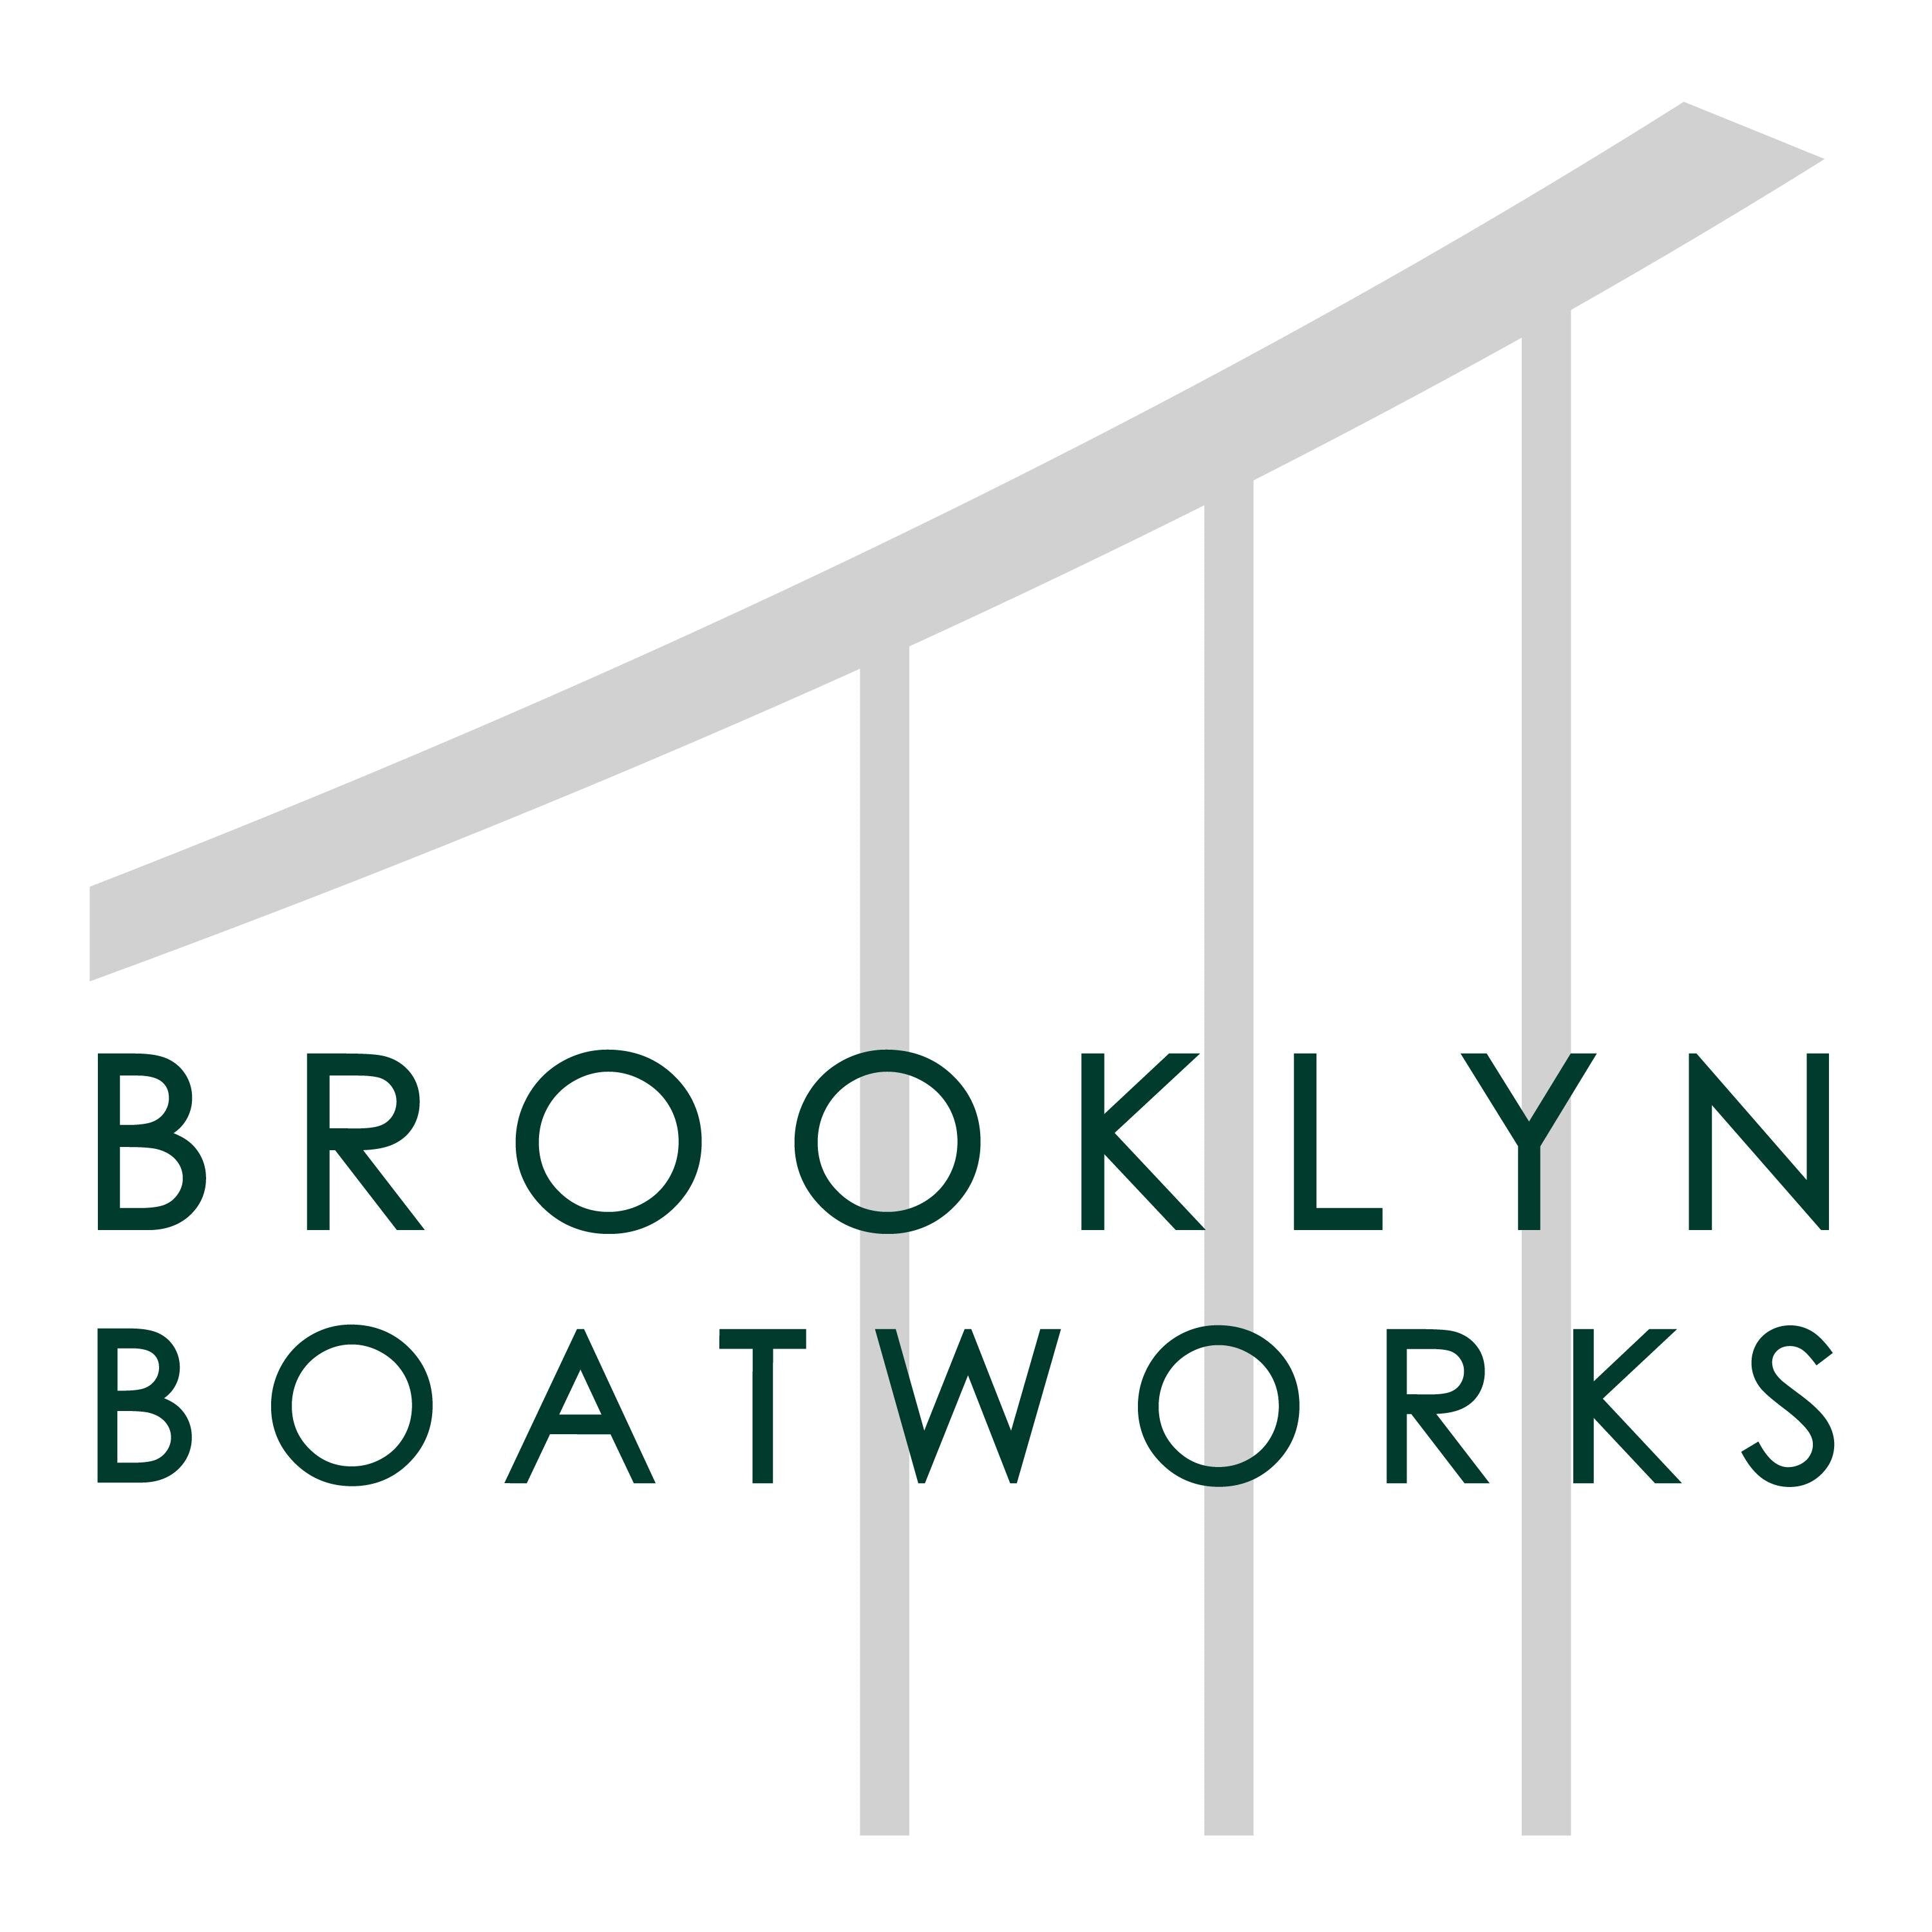 Brooklyn Boatworks - Works With UGP